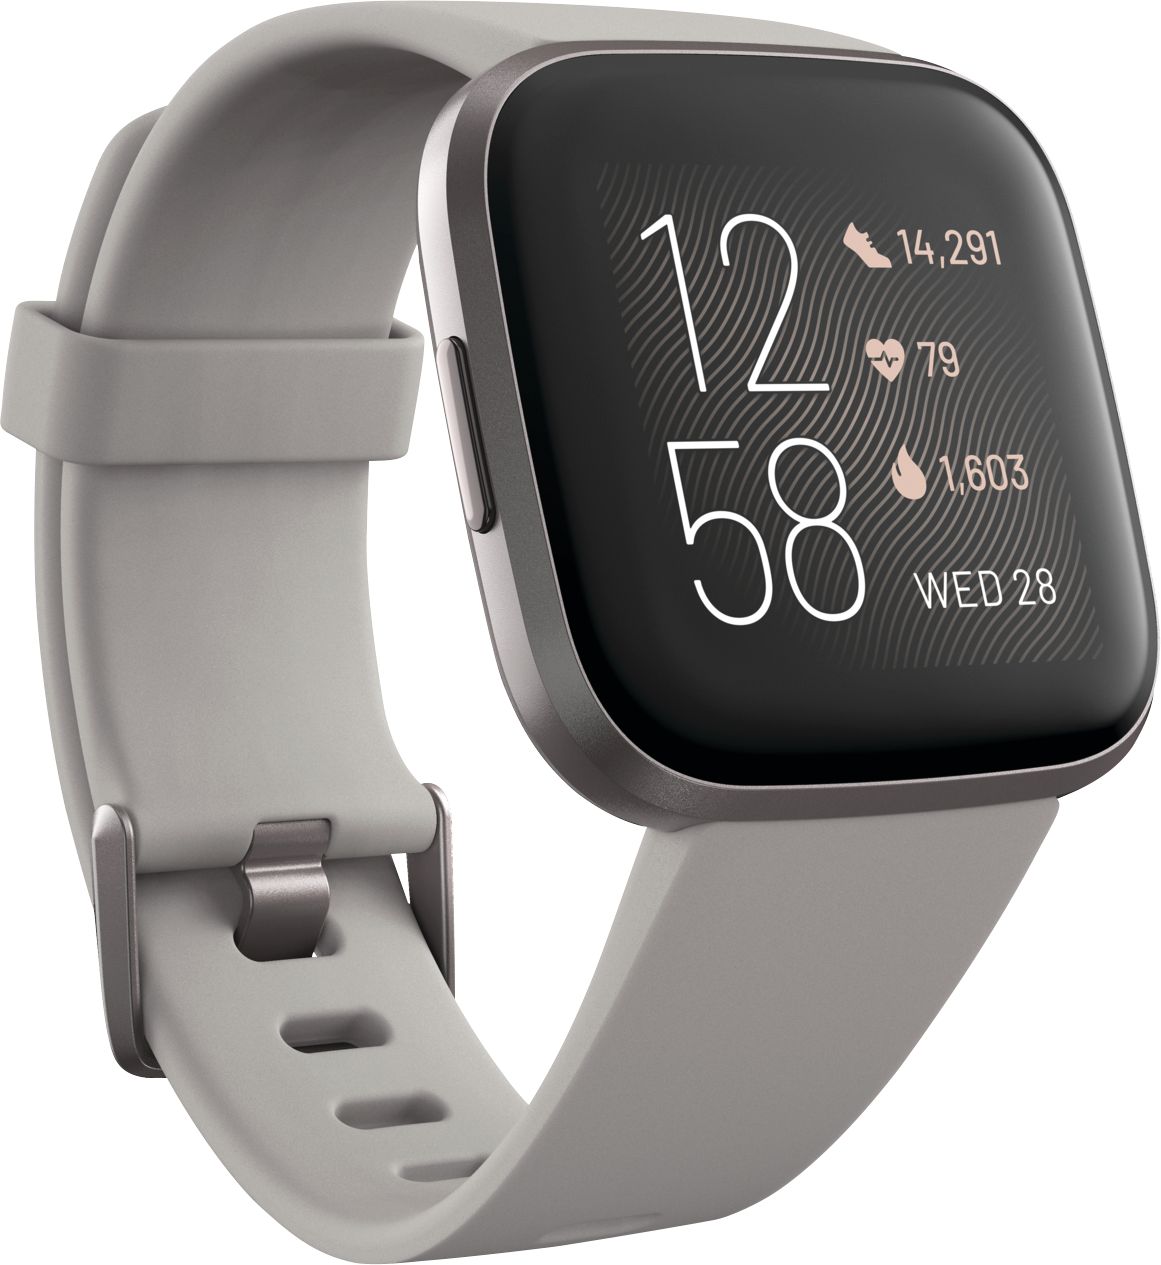 Angle View: Fitbit - Versa 2 Health & Fitness Smartwatch - Mist Gray